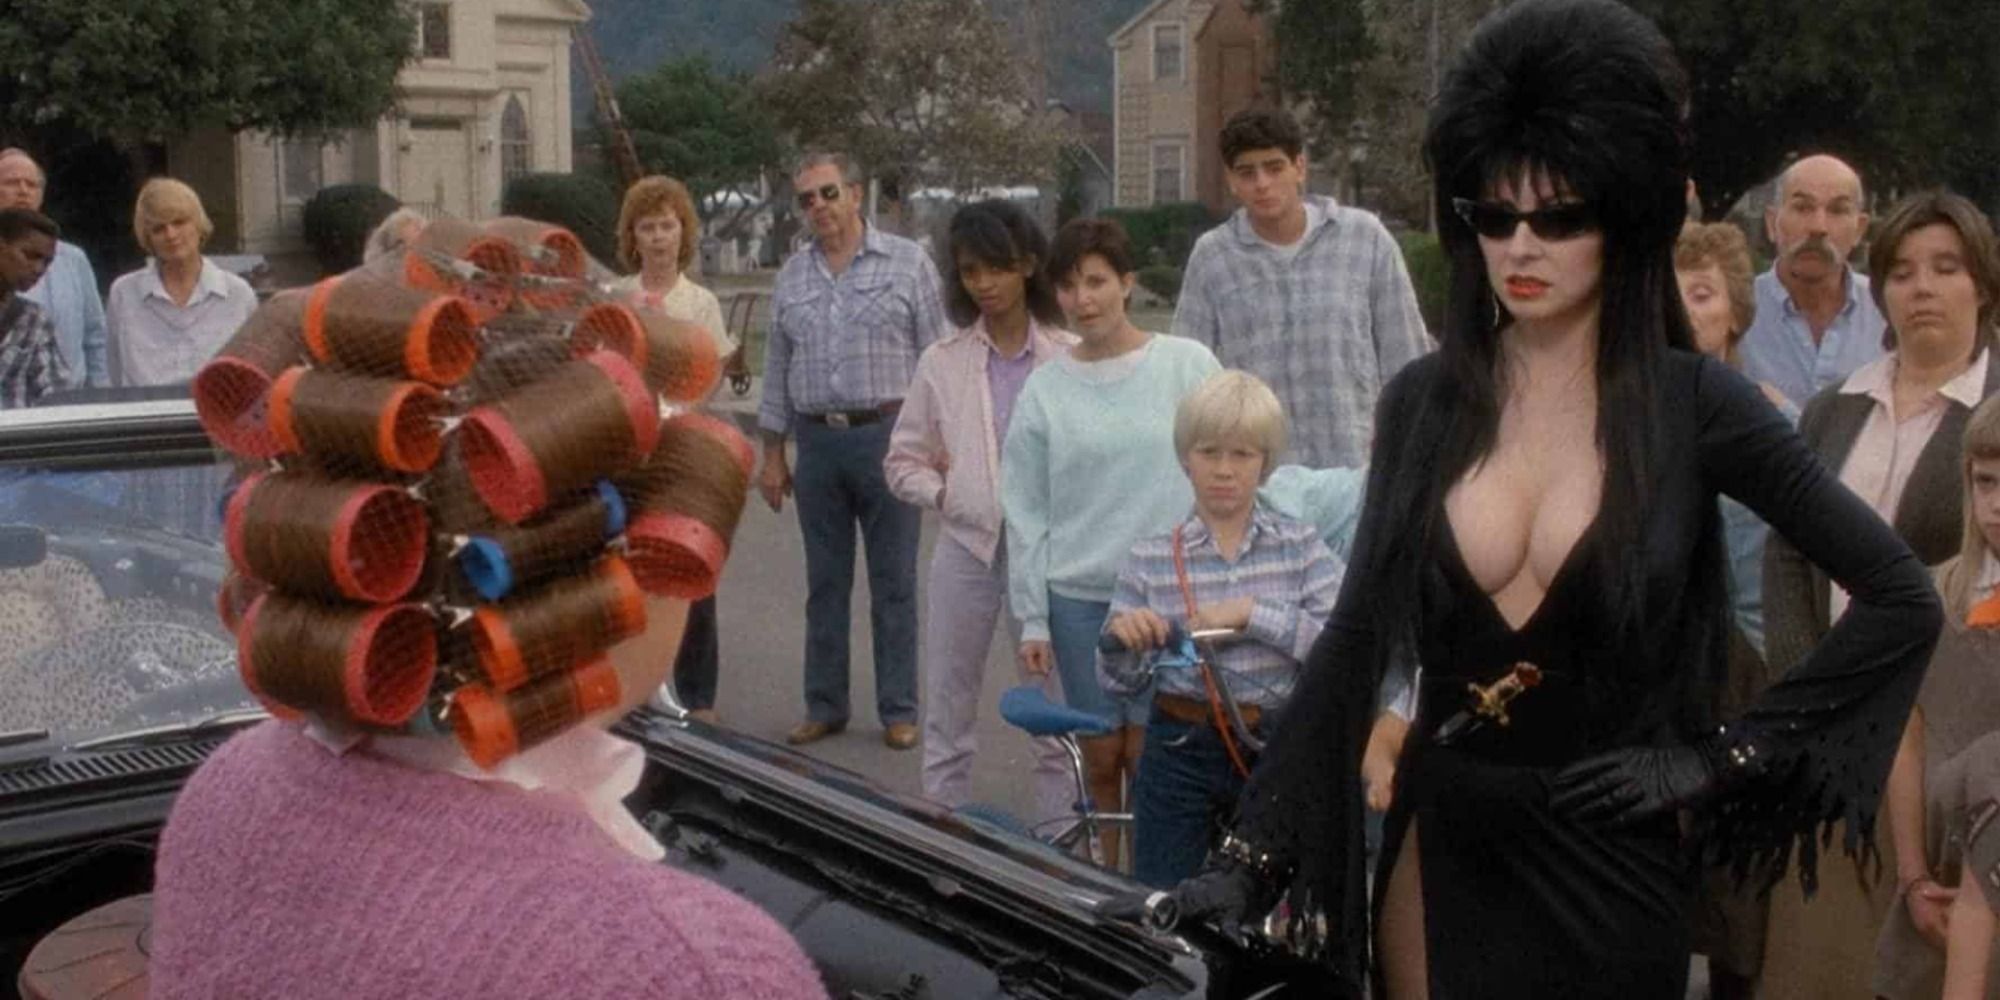 Elvira: Mistress of the Dark 1988